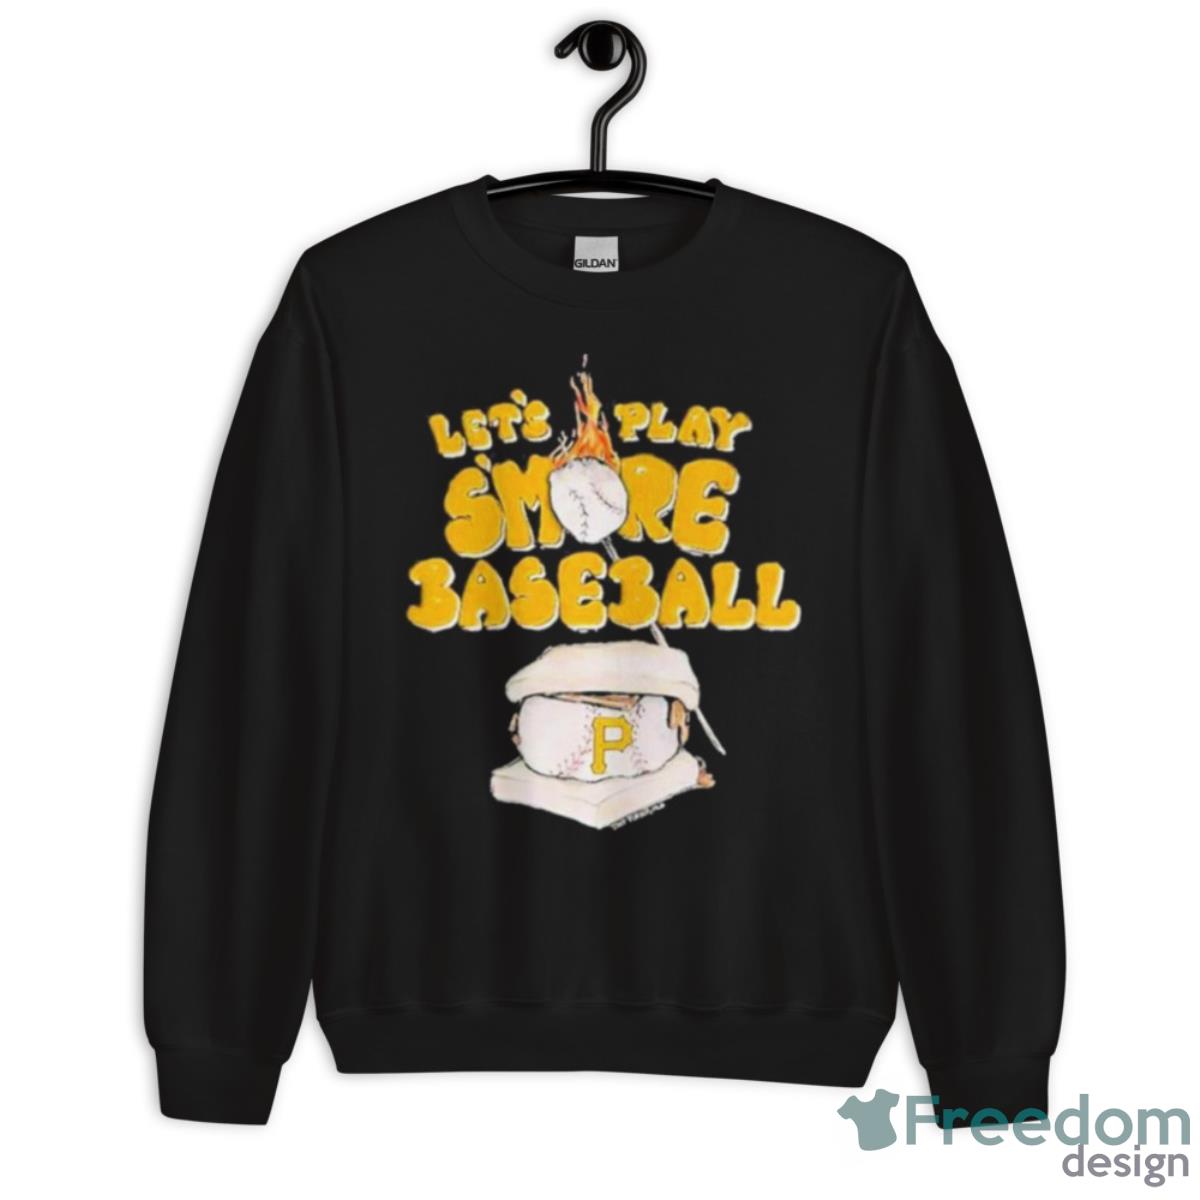 Pittsburgh Pirates Lets Play Smoke Baseball Shirt - Freedomdesign